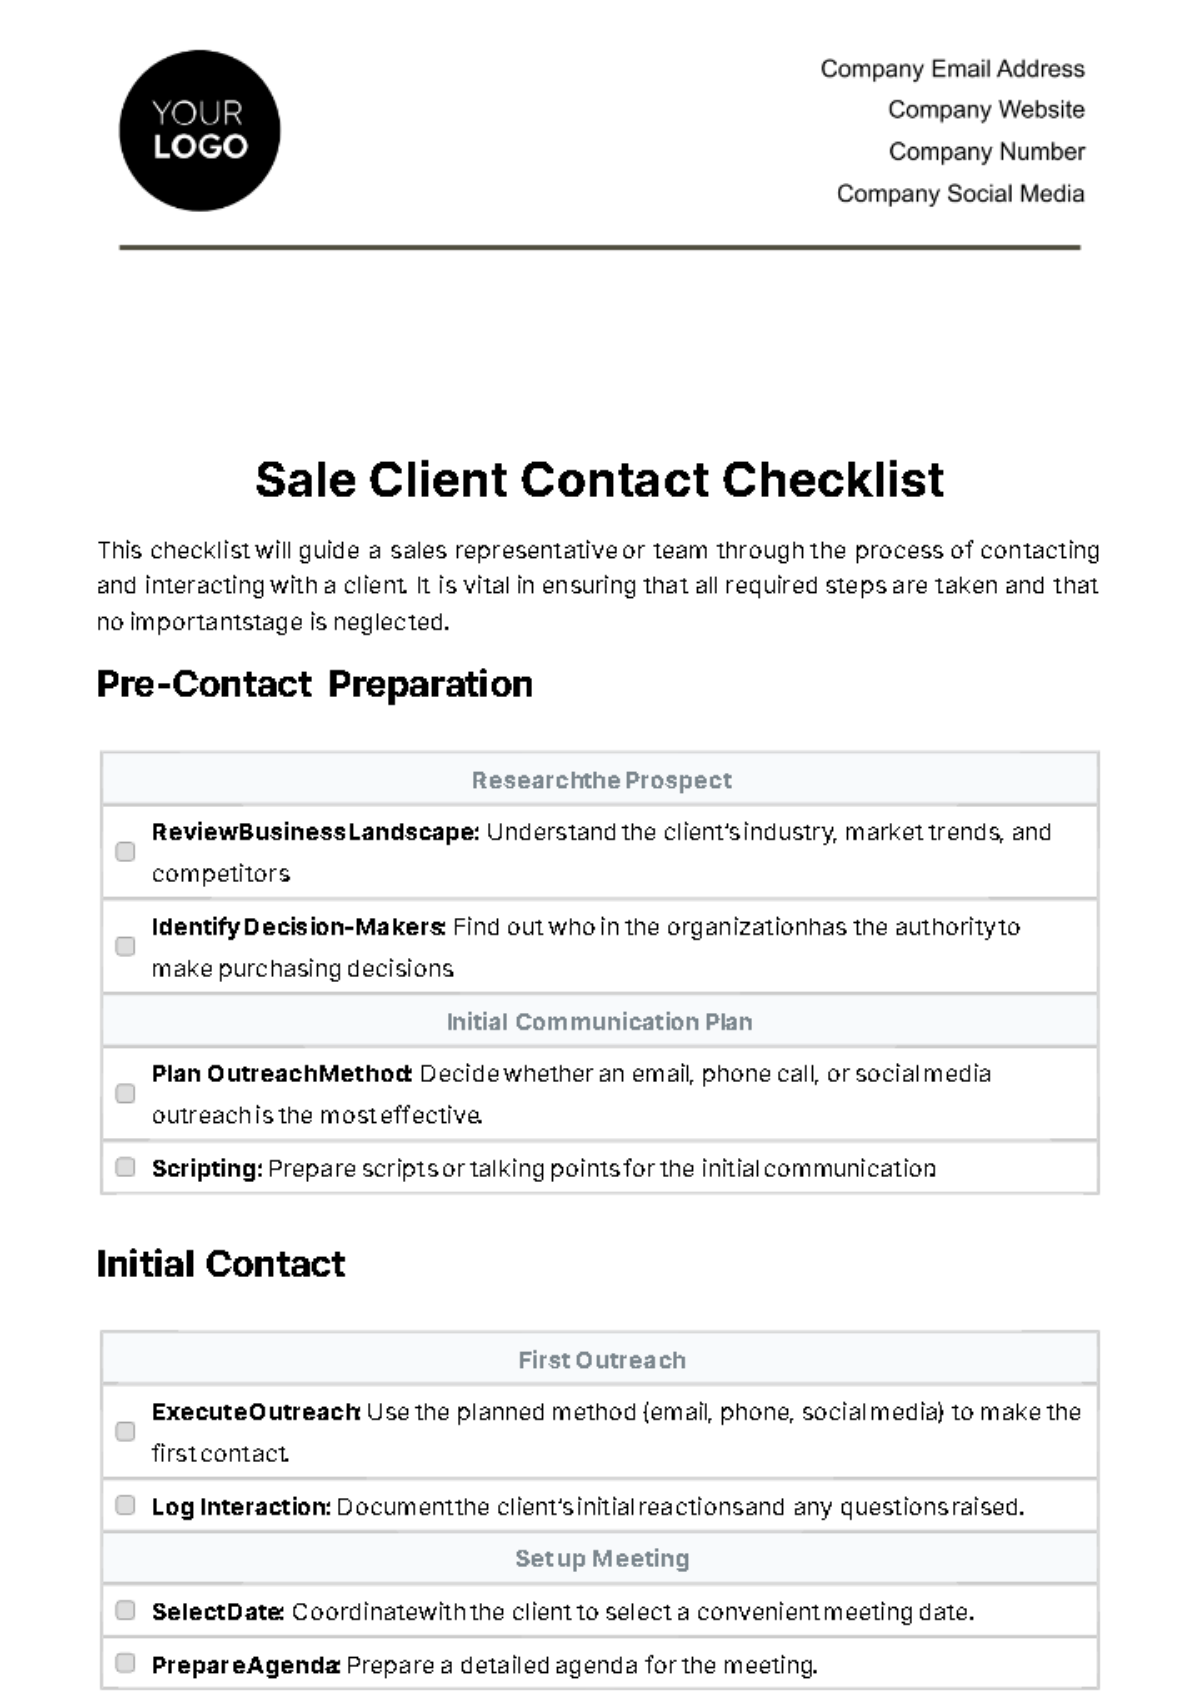 Sales Client Contact Checklist Template